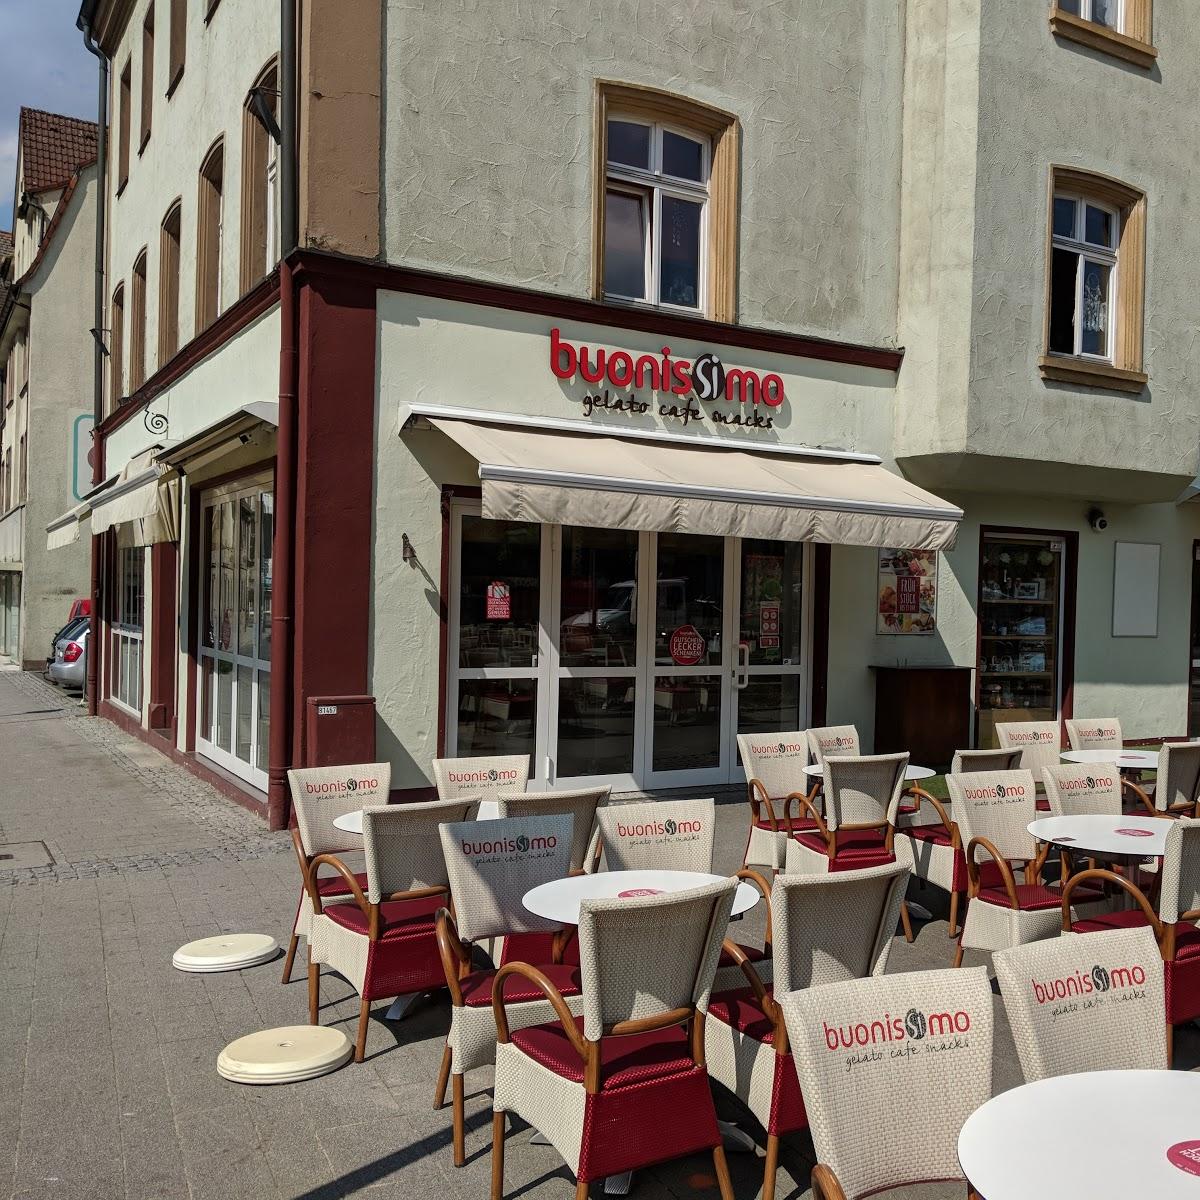 Restaurant "Buonissimo  | Italienische Eis-Manufaktur" in Kulmbach